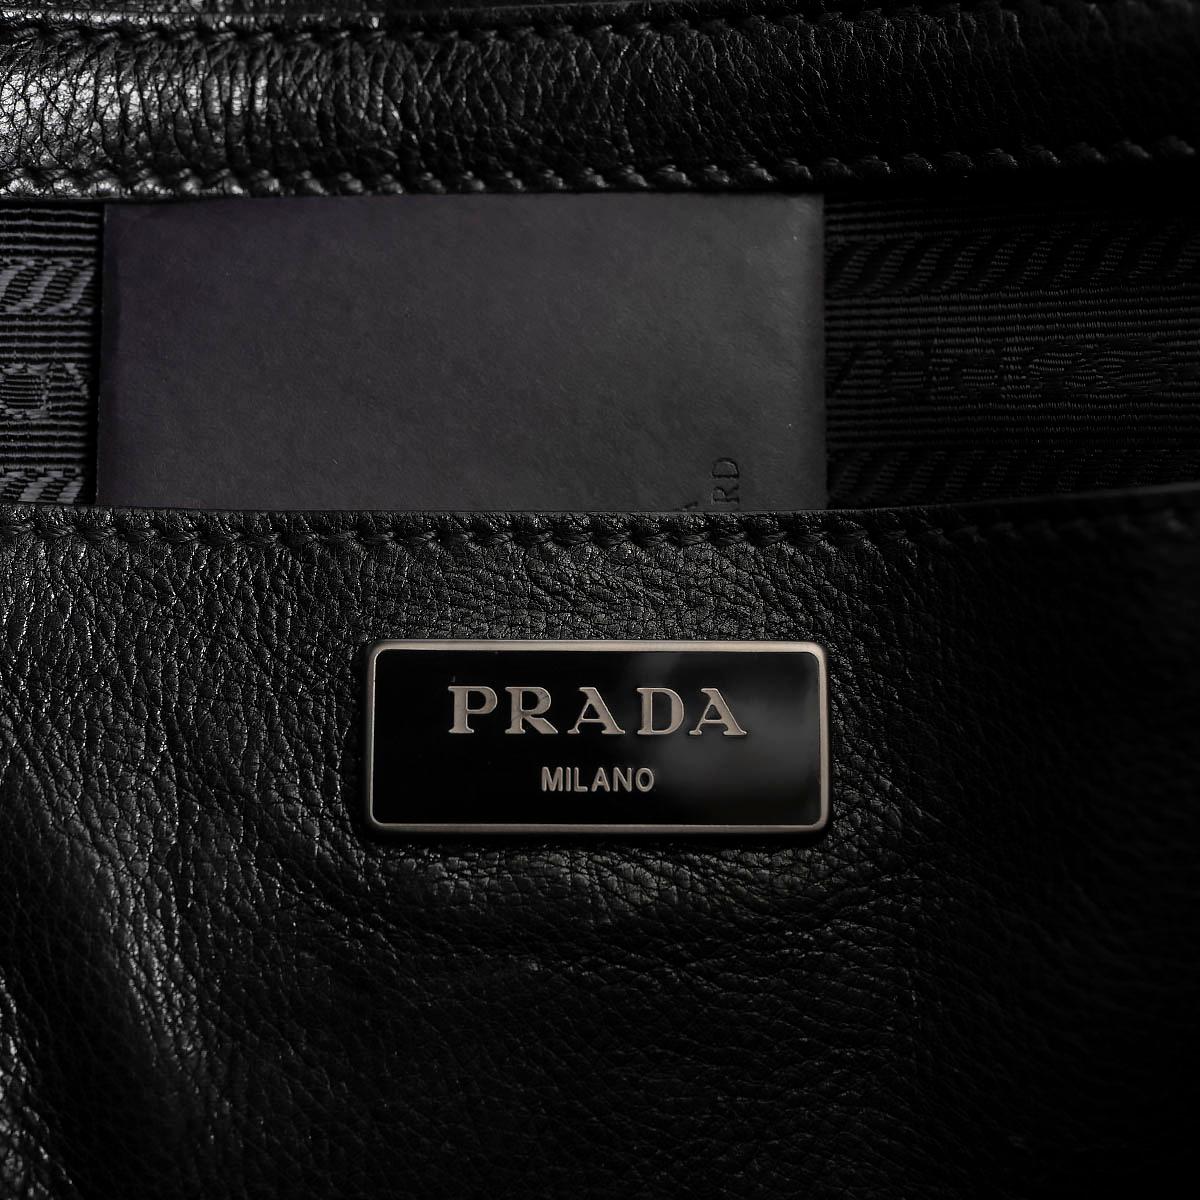 PRADA Pomice beige & black Glace leather SOUND Tote Bag For Sale 4